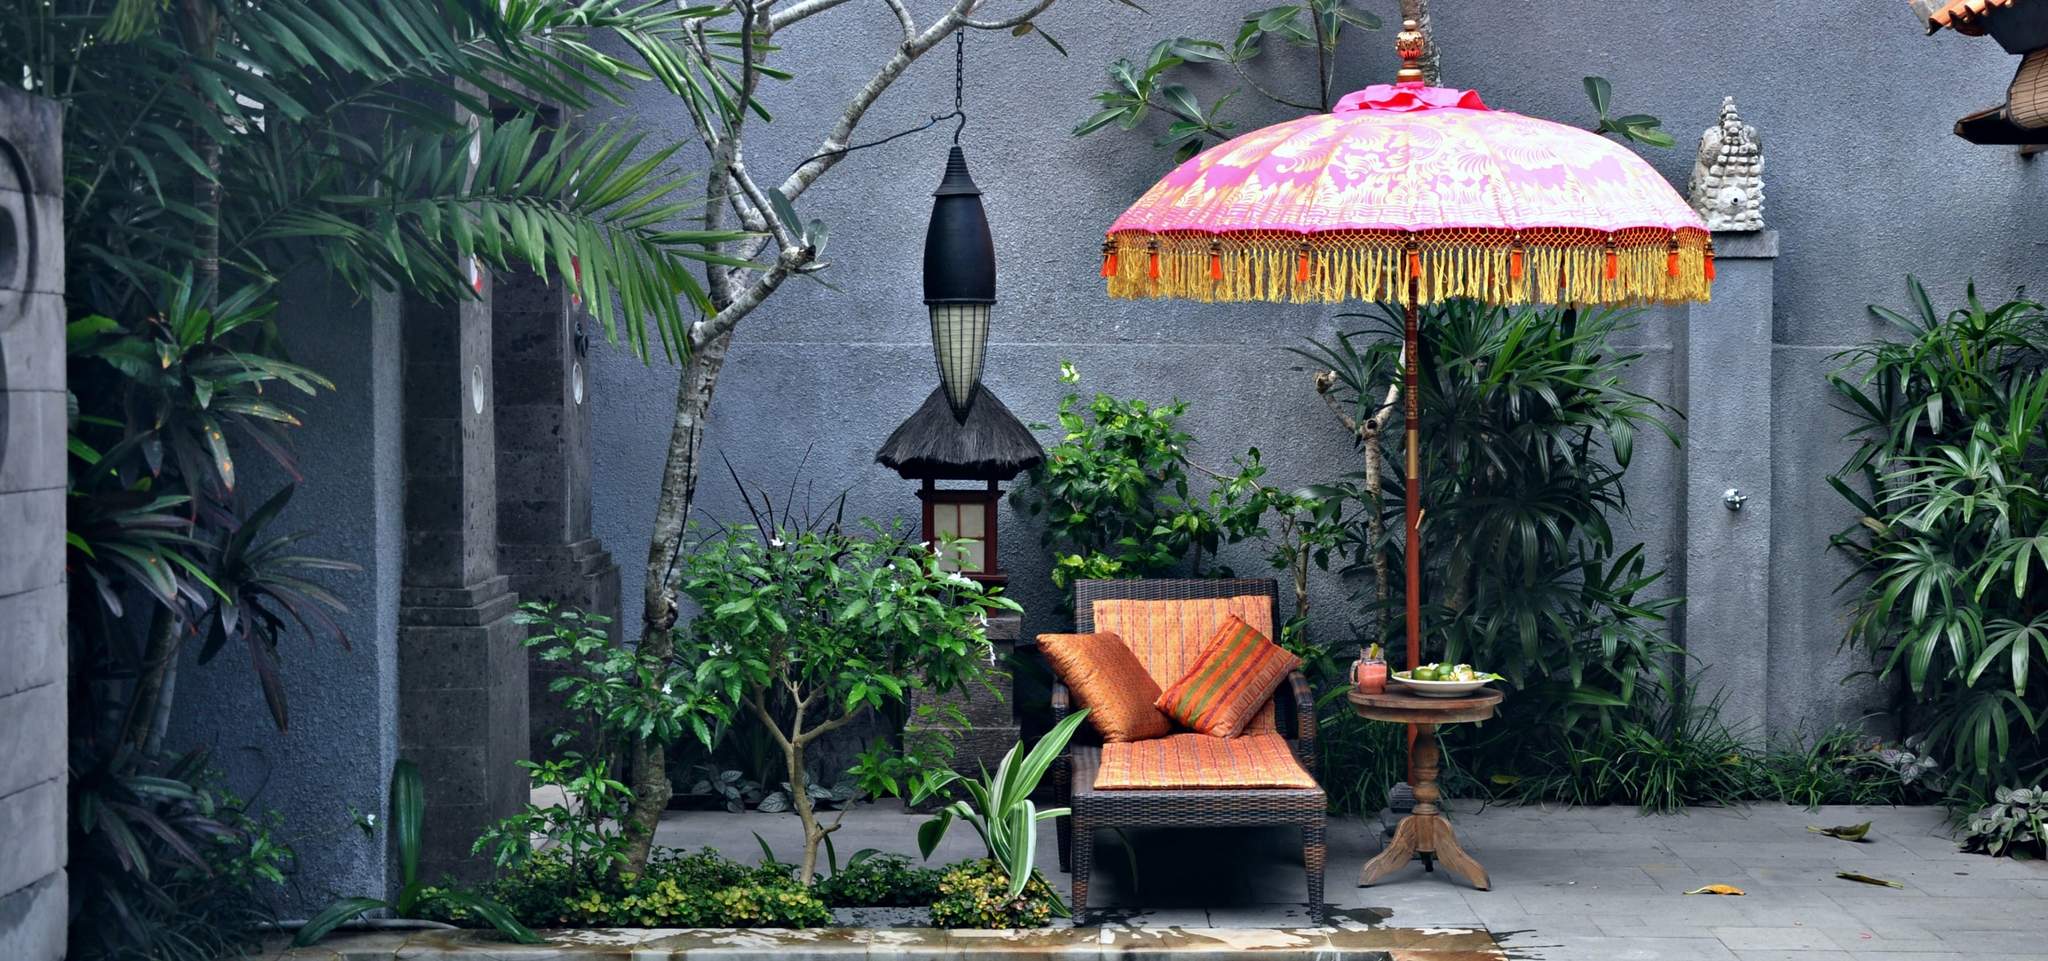 Bali garden parasol pink orange and gold whitney